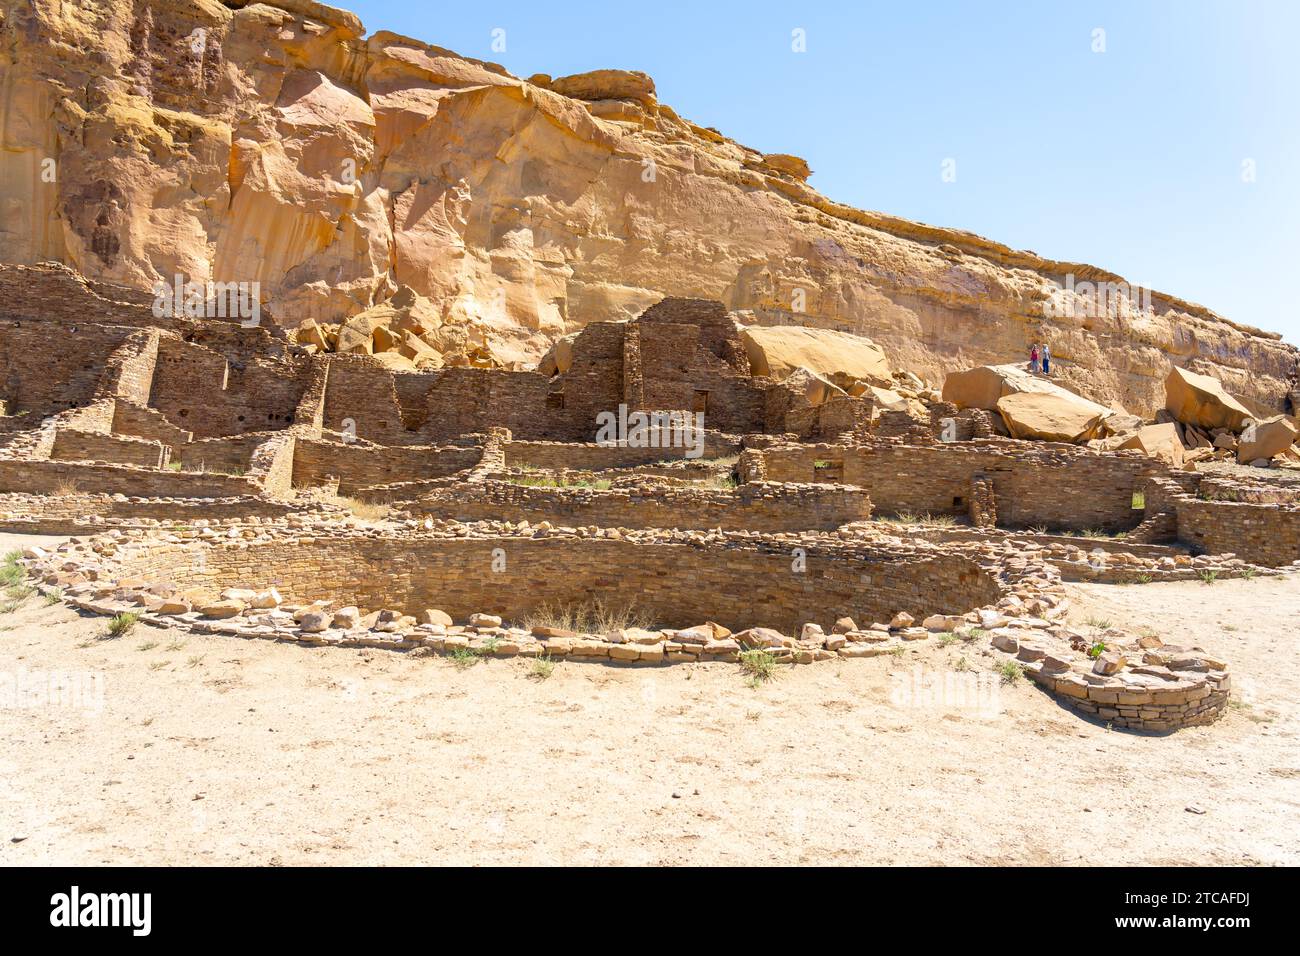 People visiting Ancient ruins at Pueblo Bonito in Chaco Culture National Historical Park, New Mexico, USA Stock Photo